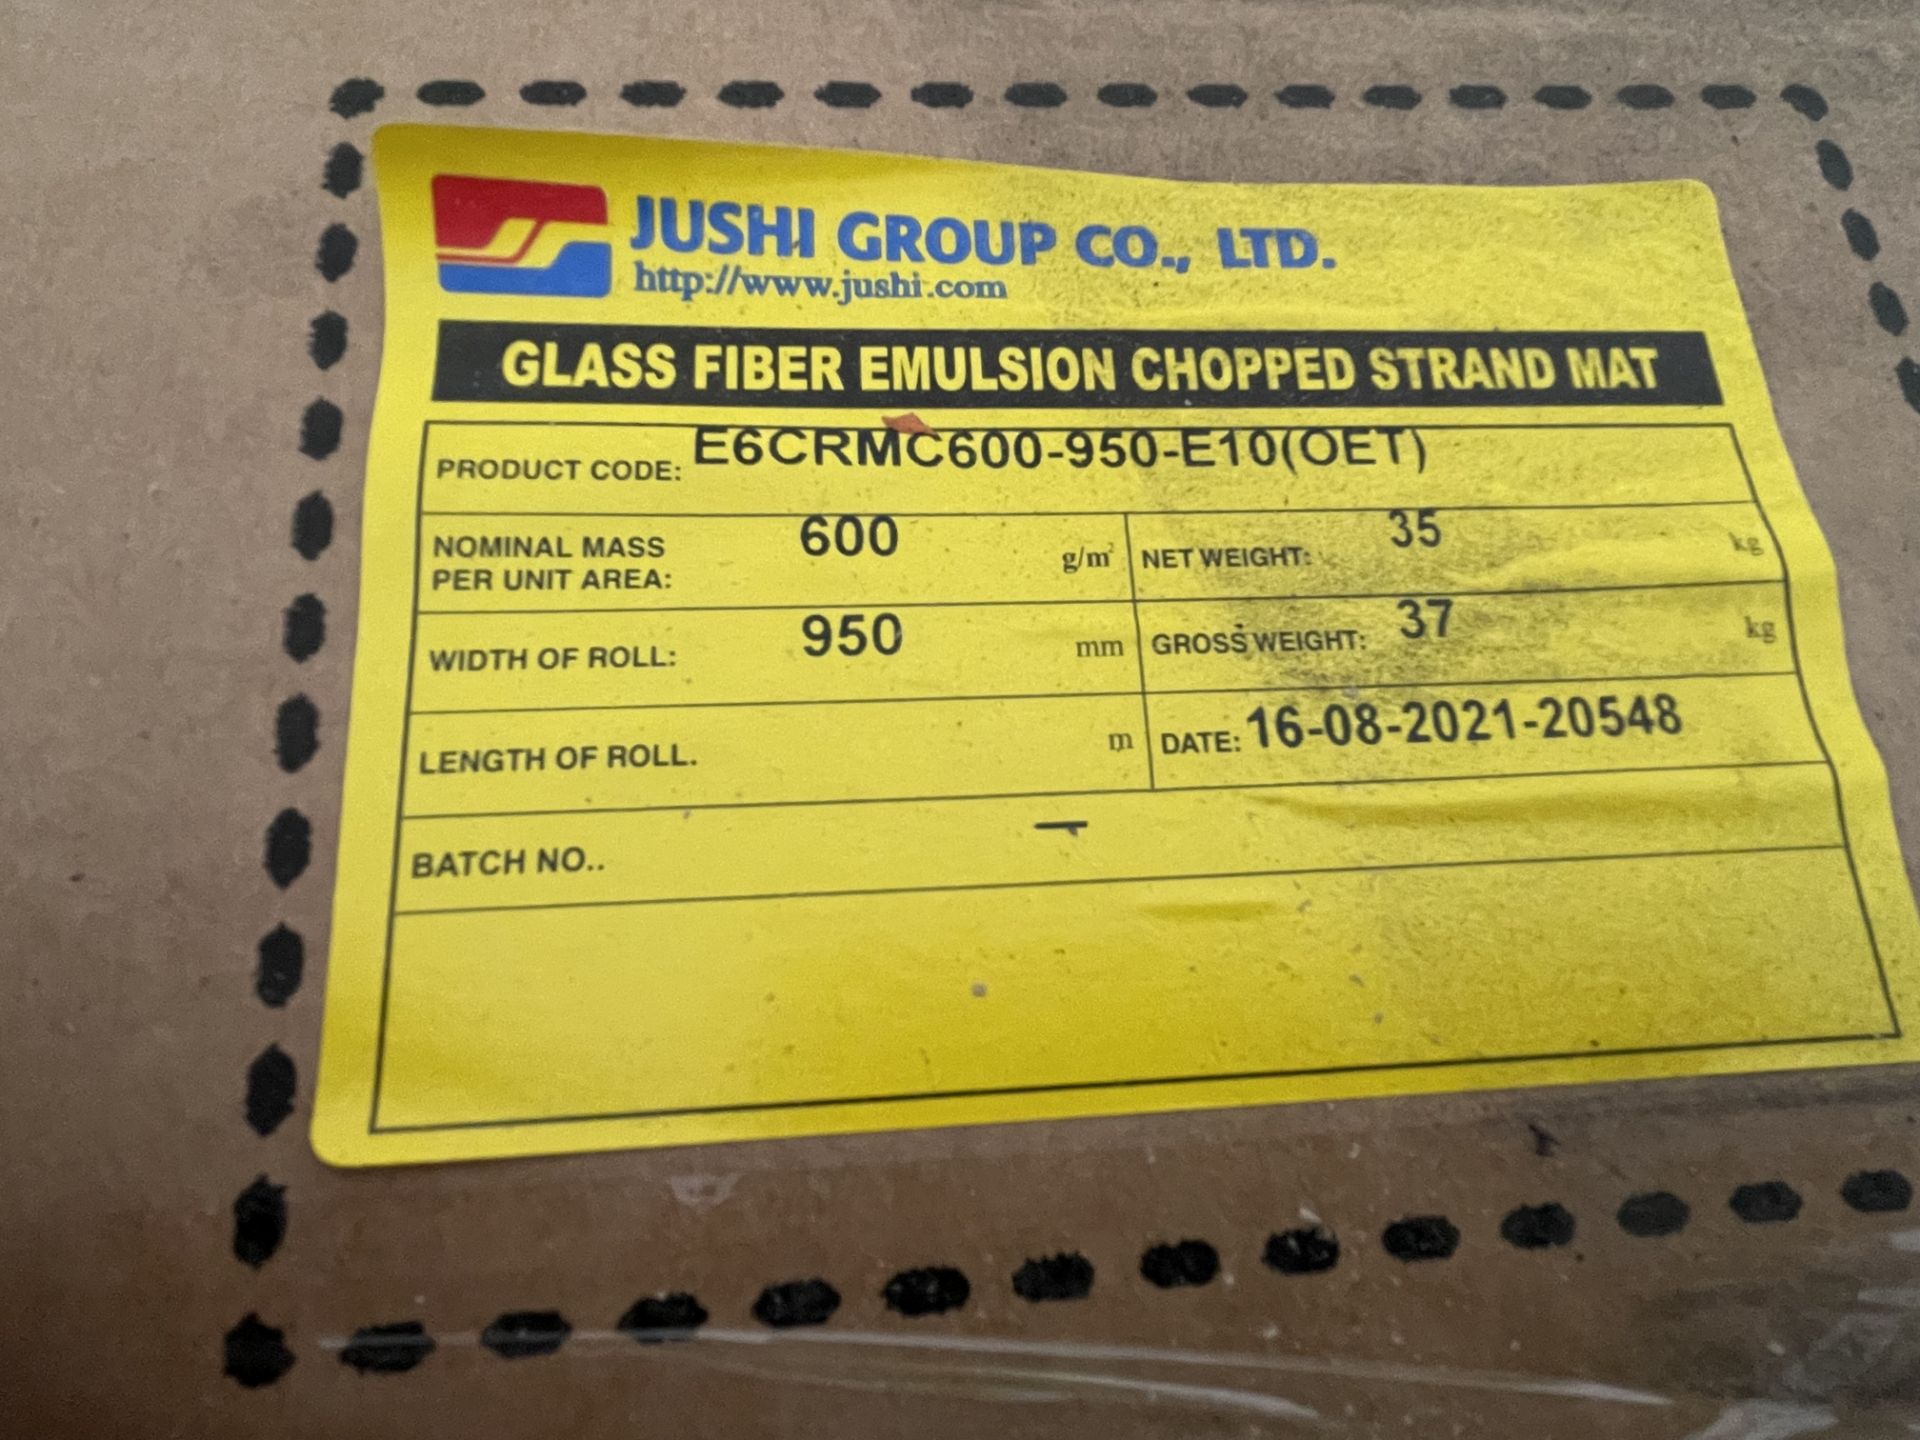 9x Rolls of Jushi E6CRMC600-950-E10 600g/m2 950mm Gass Fiber Emultion Chopped Strand Mat Fiberglass, - Image 3 of 3